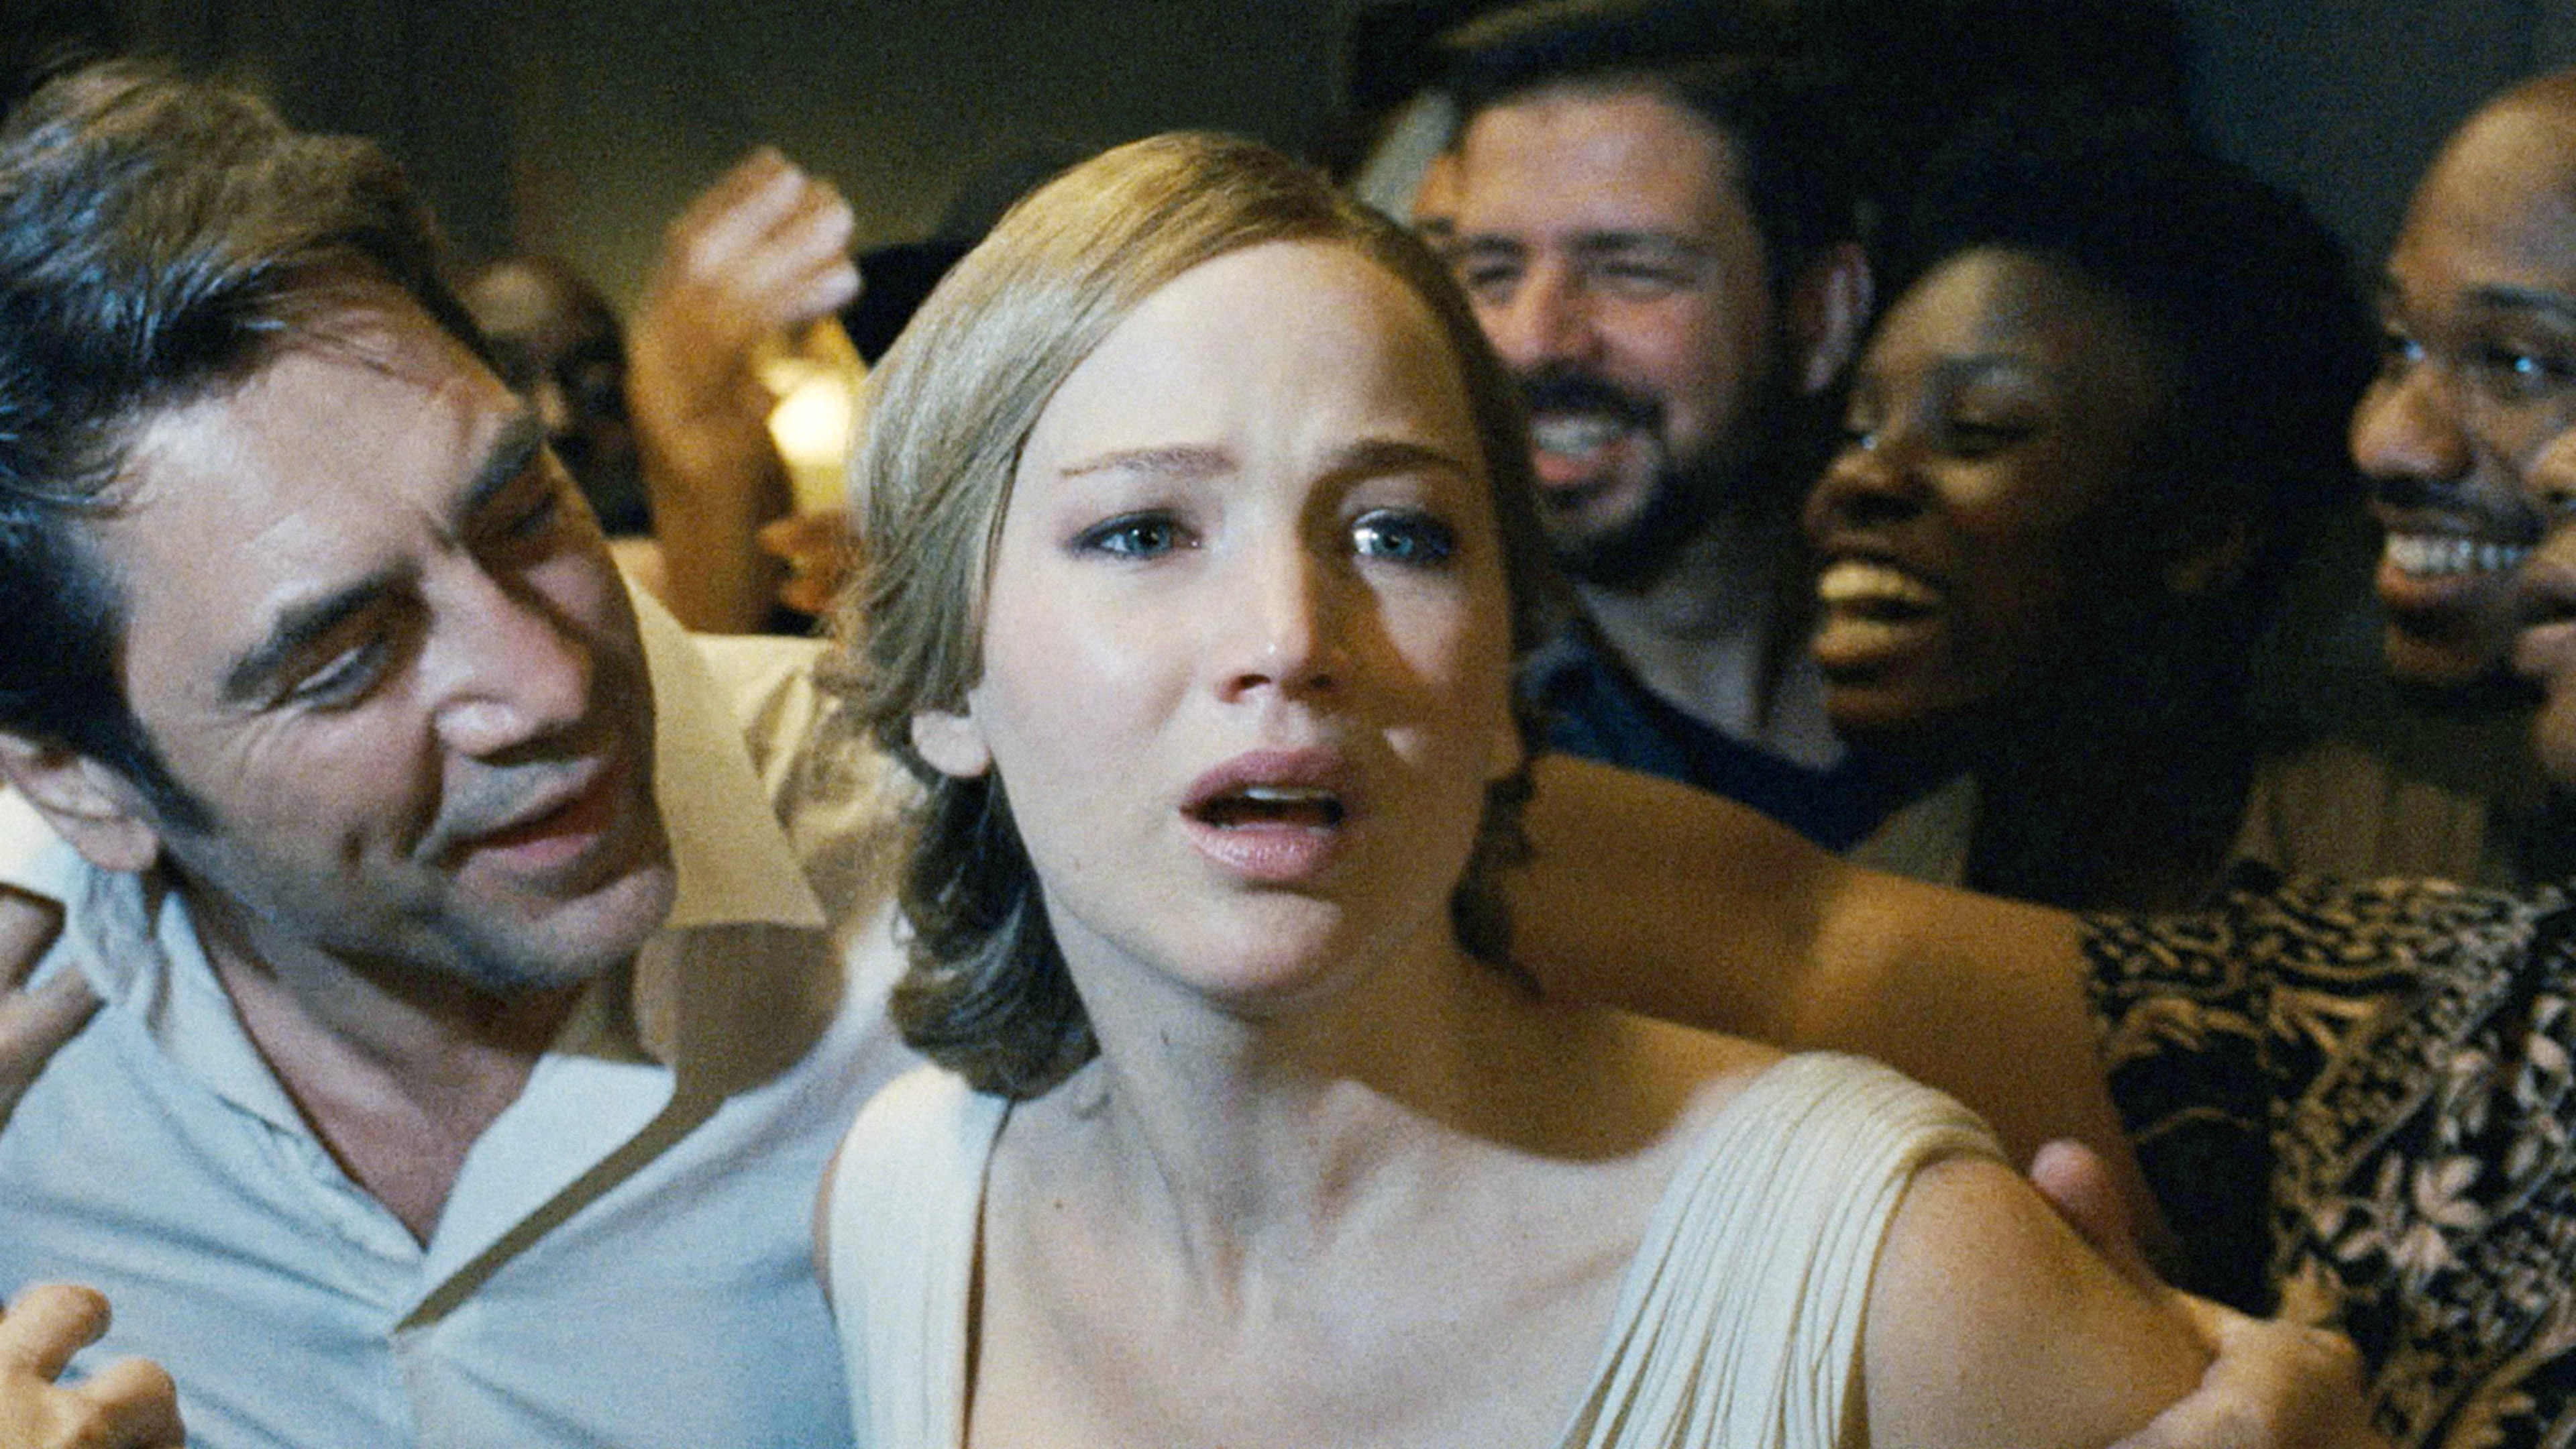 Jennifer Lawrence is swarmed by a crowd of people.